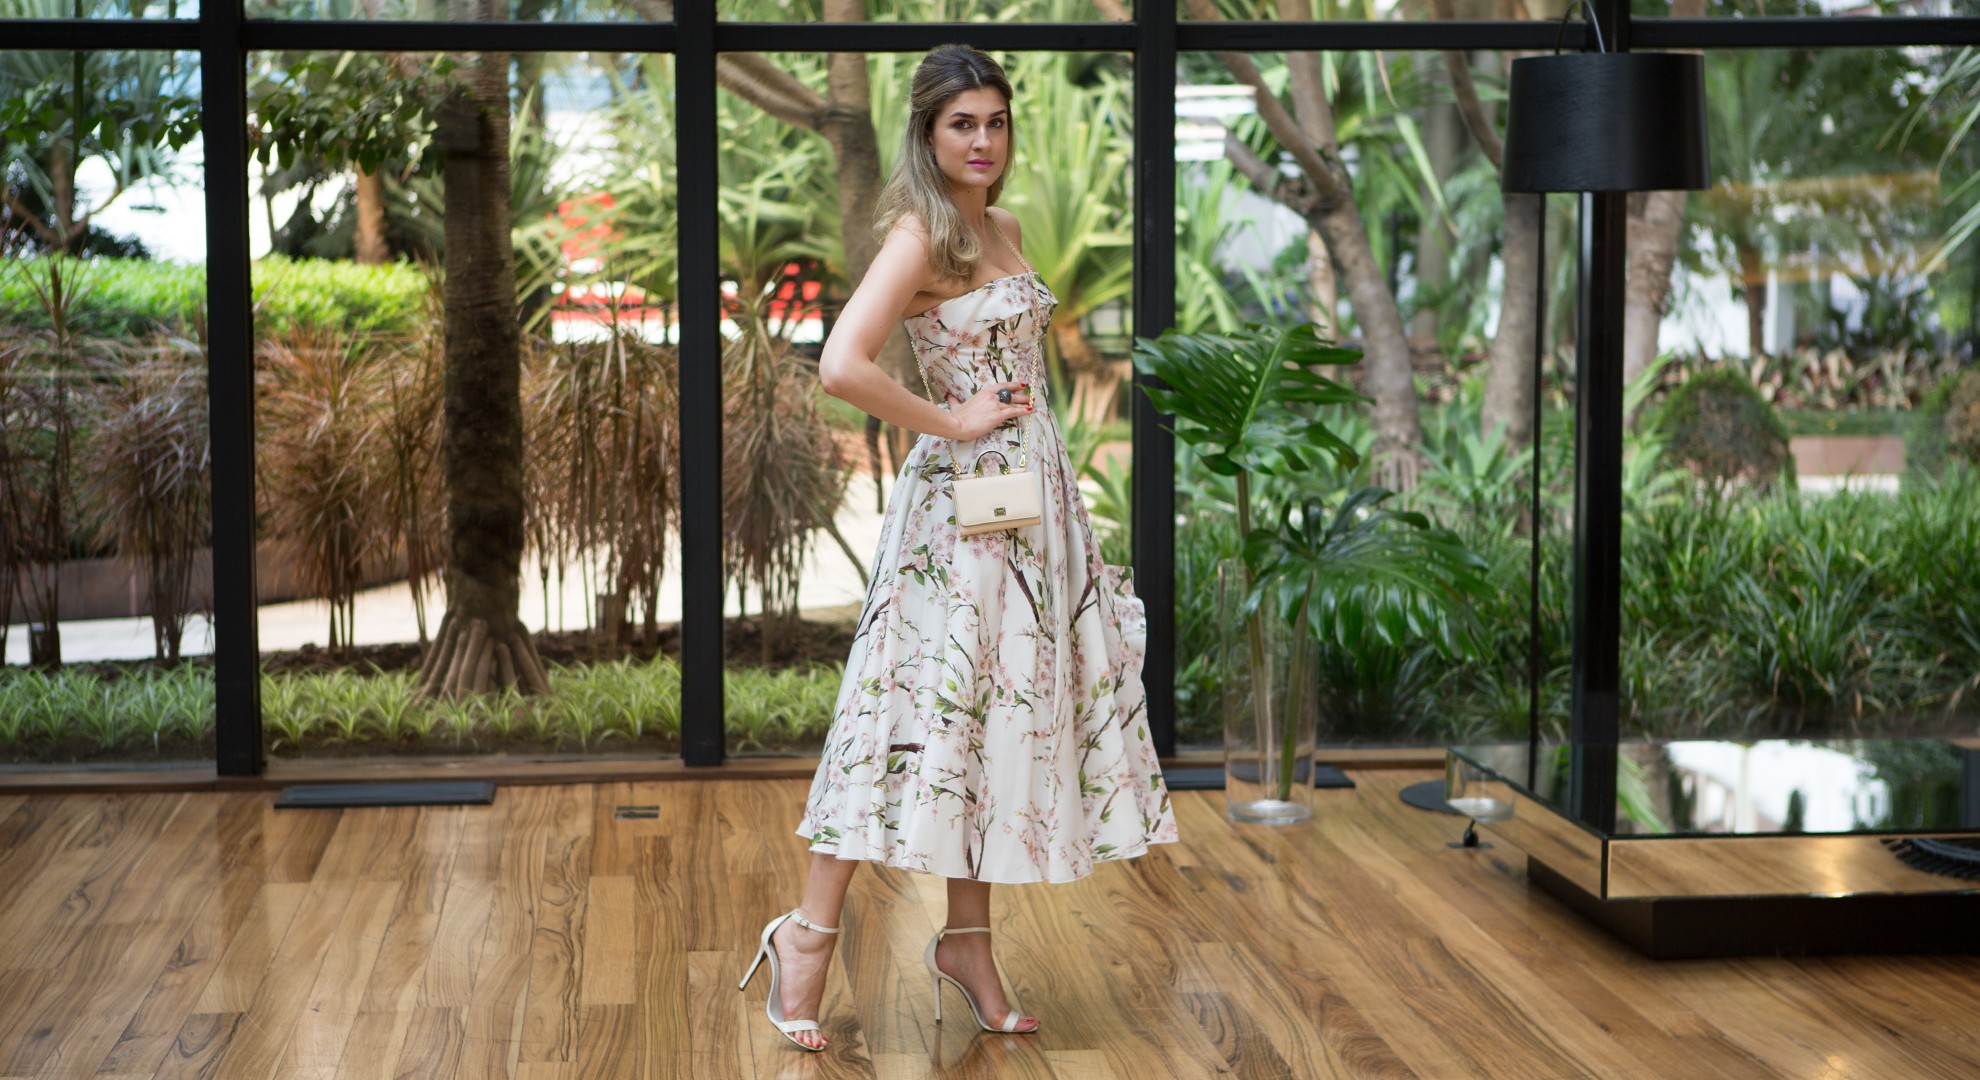 Barbara Migliori com vestido de comprimento mídi e estampa floral: boa investida para um casamento diruno (Foto: Pablo Escajedo)